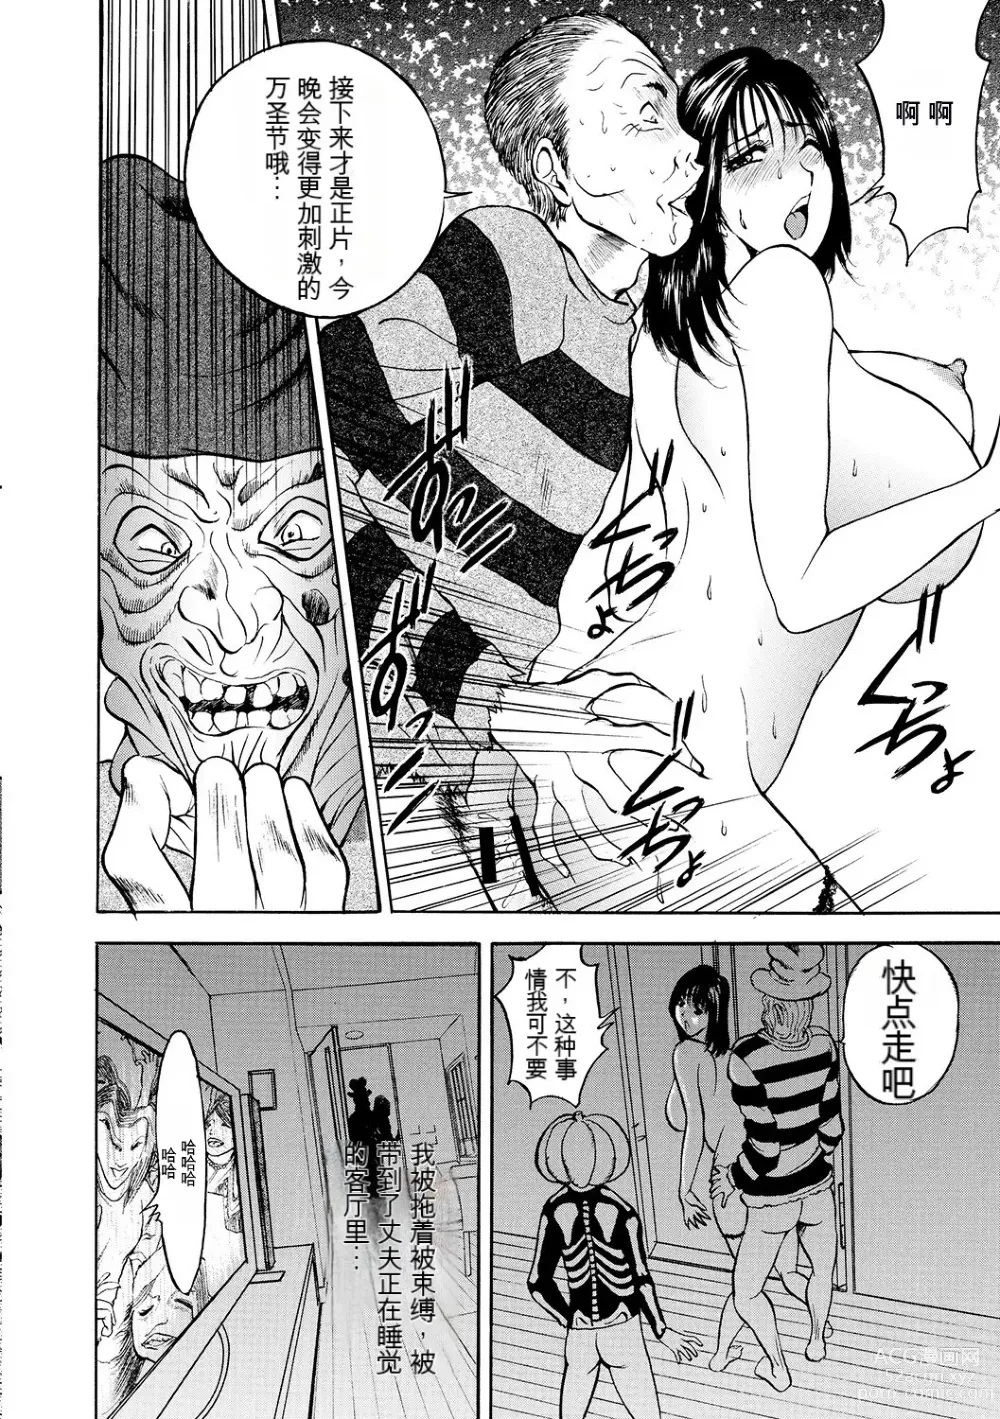 Page 206 of manga 母淫いぢり Boin Ijiri